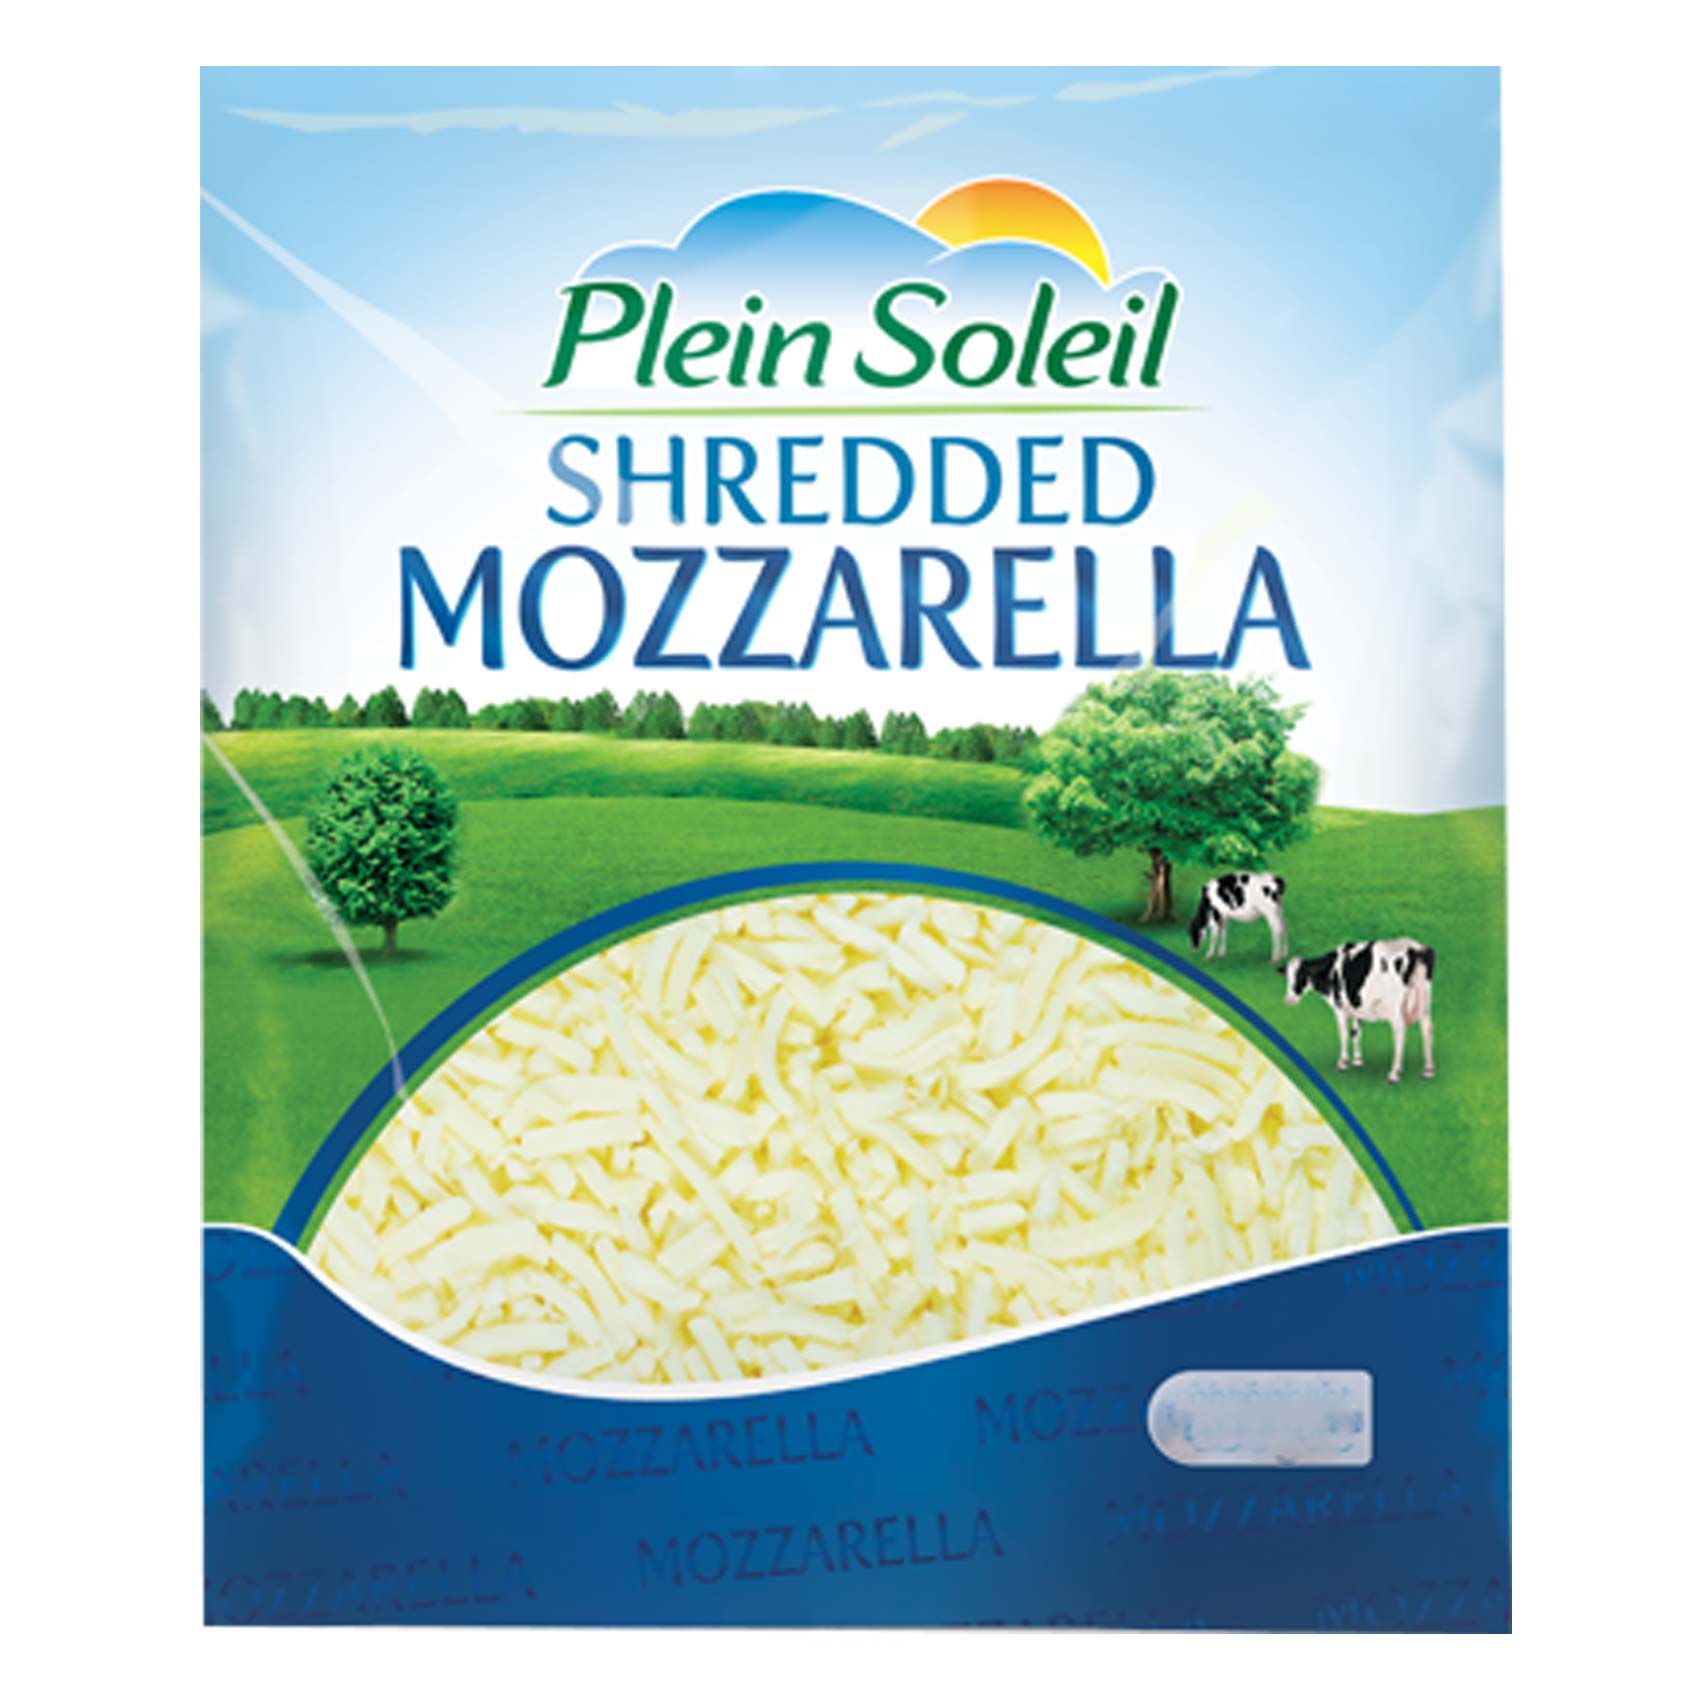 Plein Soleil Shredded Mozzarella Cheese 900g